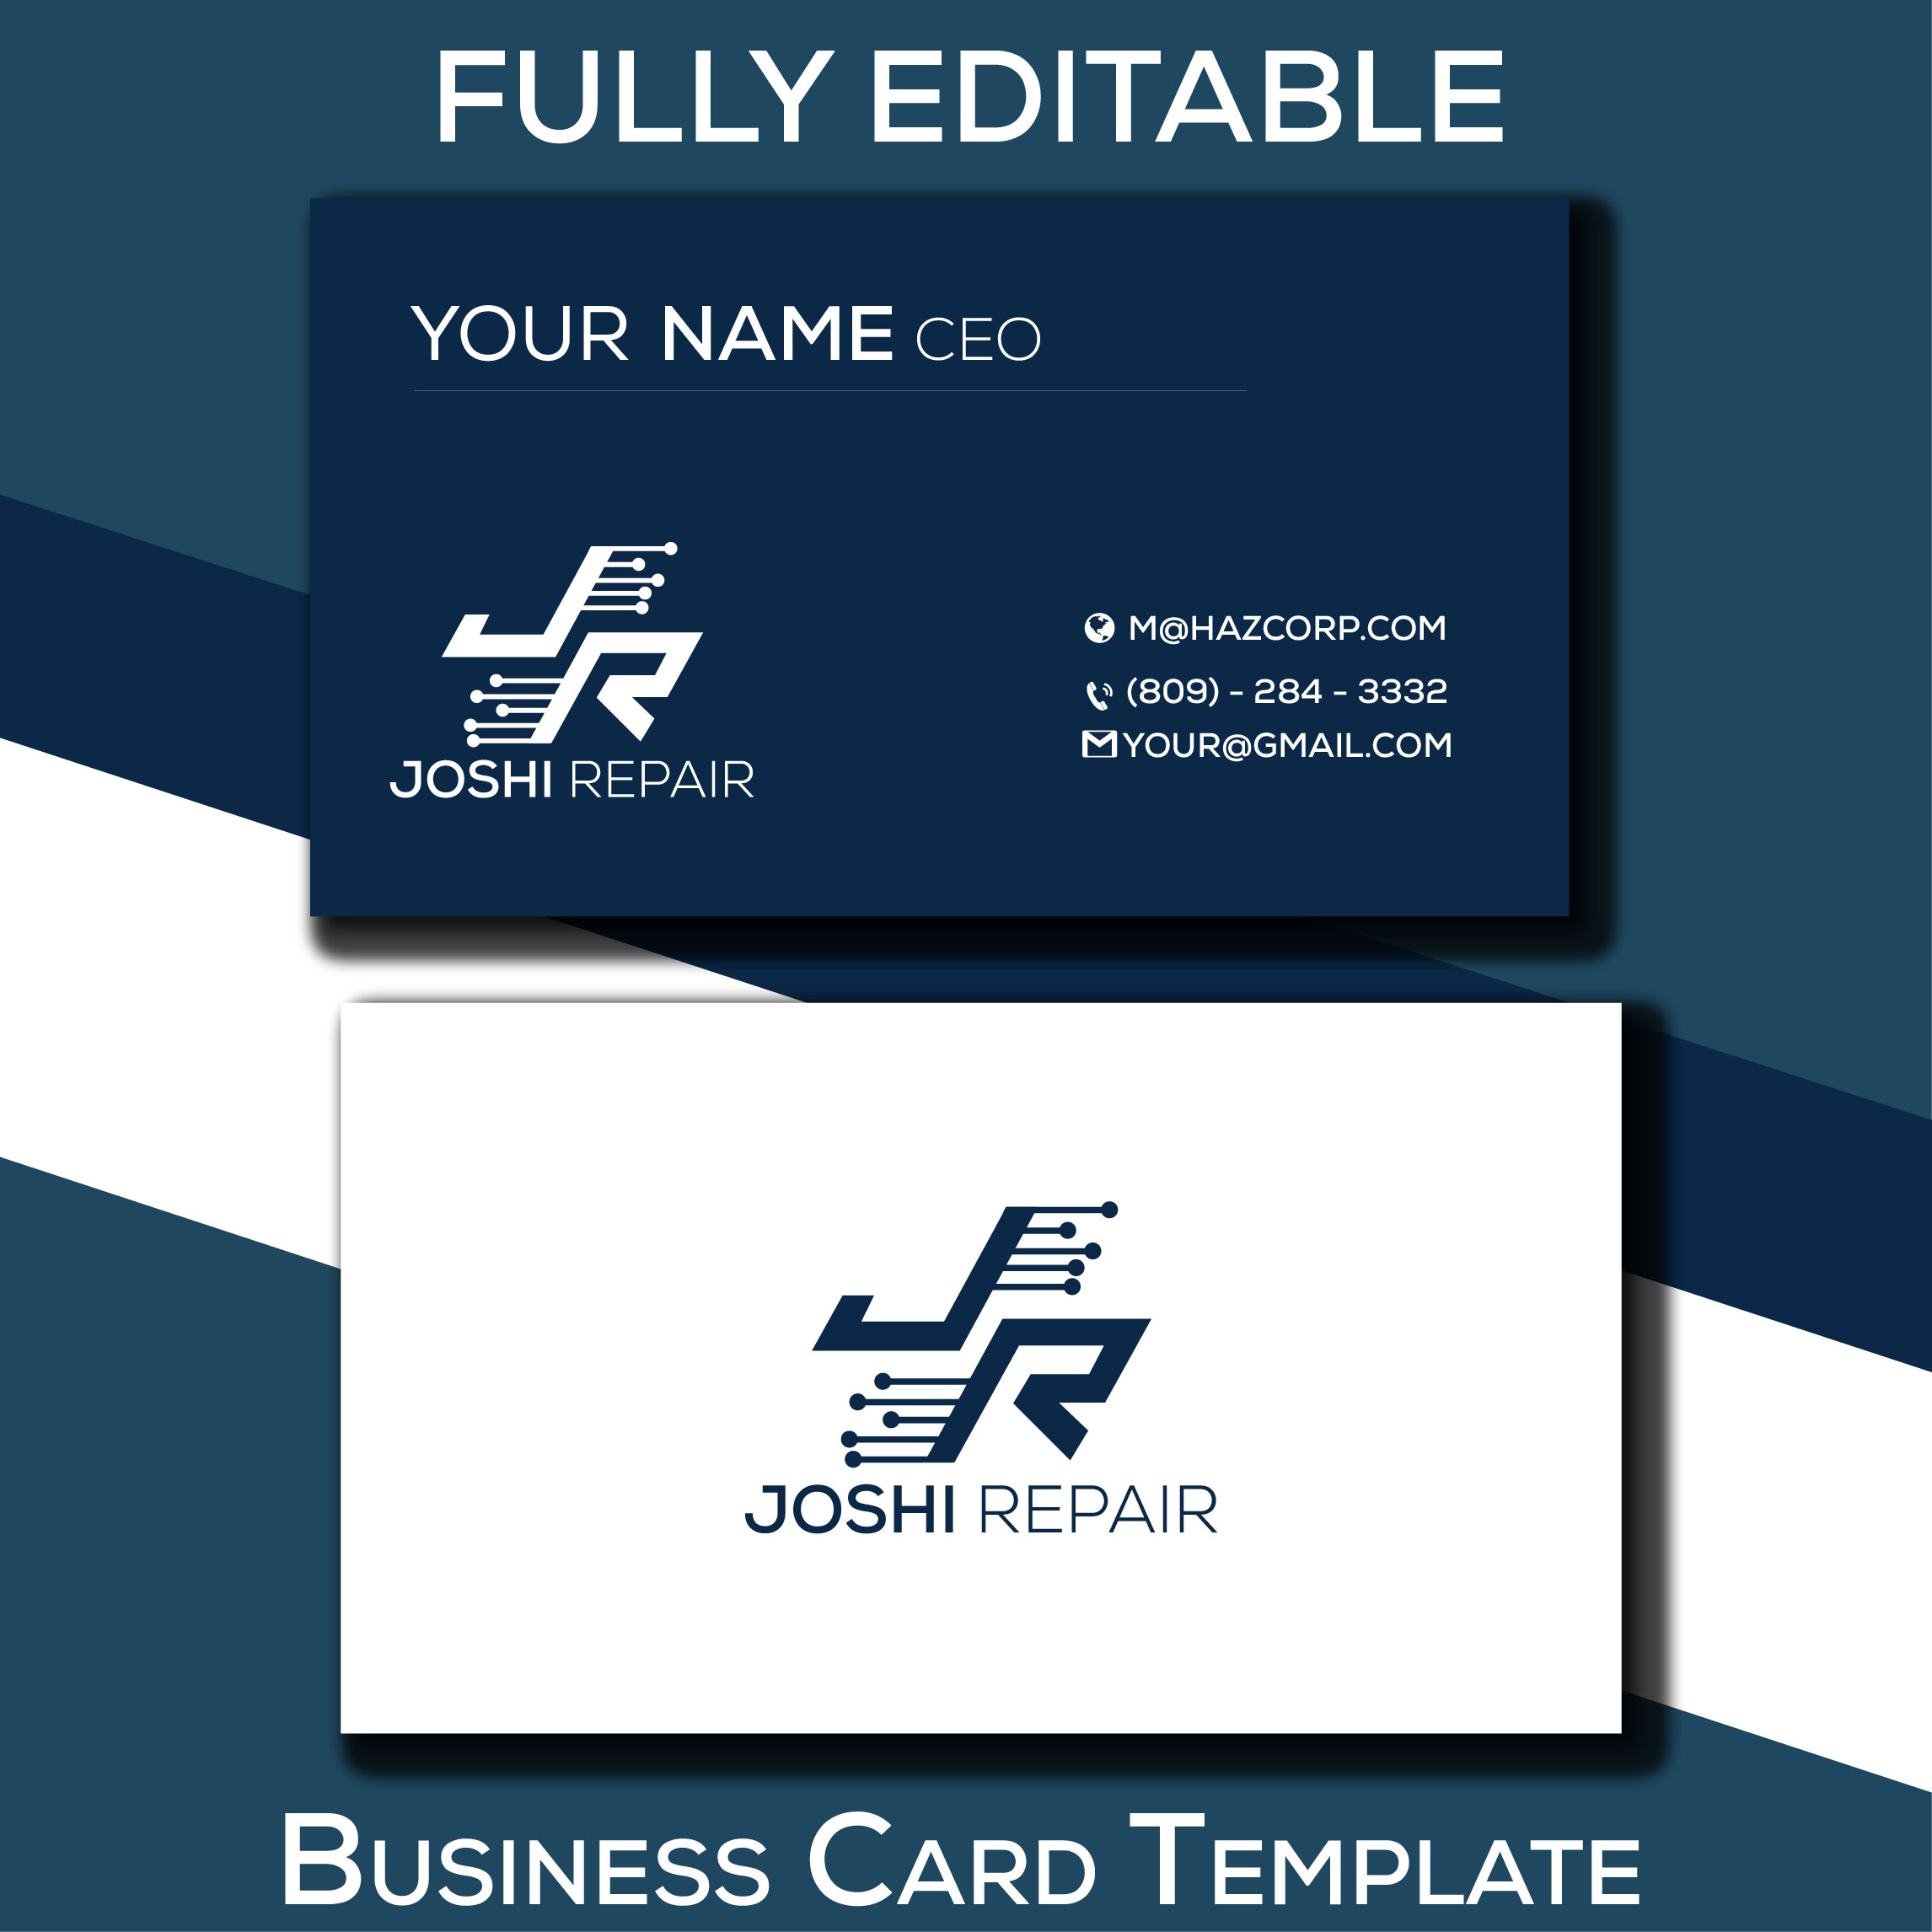 Minimalist Business Card Template (Fully Editable) main cover.